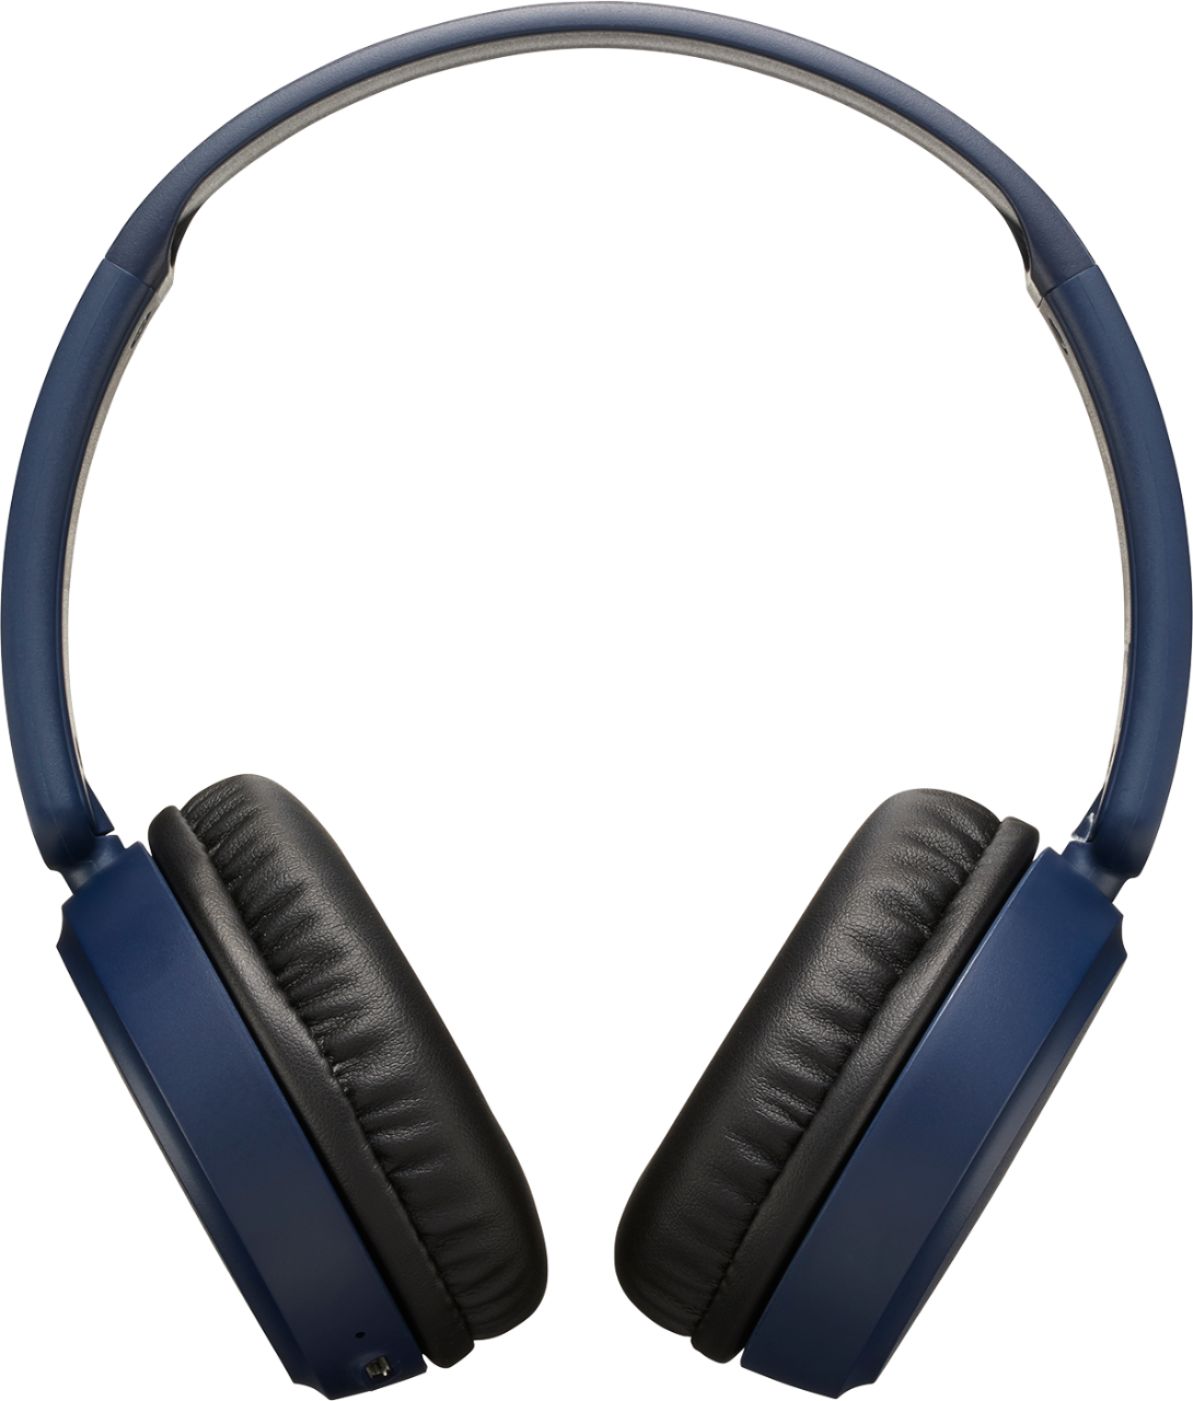  JVC HA-S35BT-B-U Auriculares inalámbricos Bluetooth